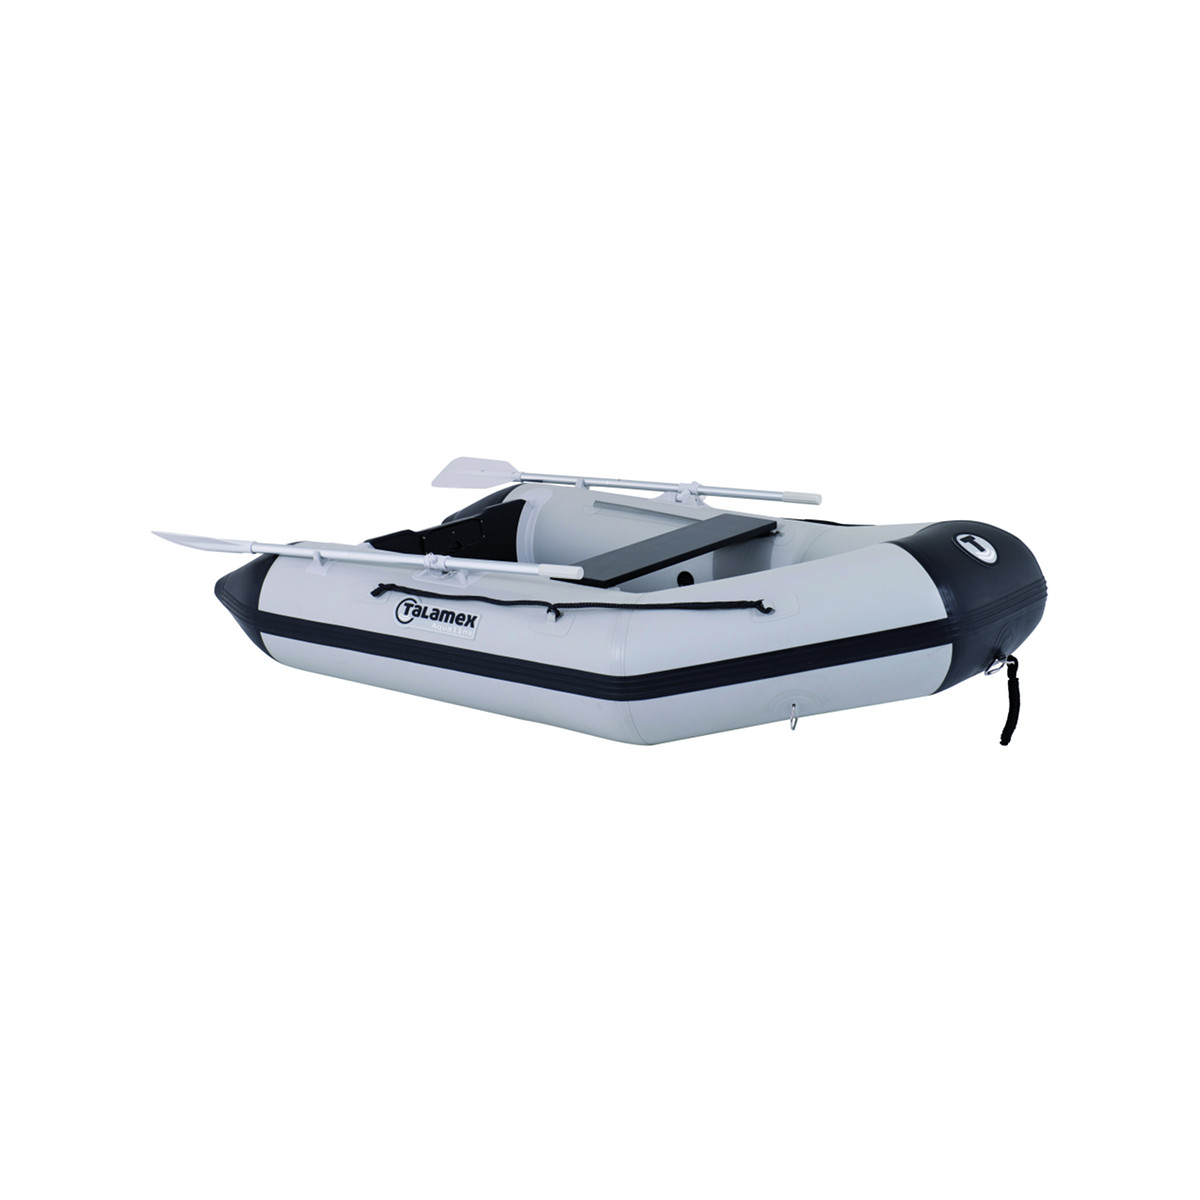 Talamex Aqualine QLS250 opblaasbare rubberboot met lattenbodem, lengte 2,50m, grijs